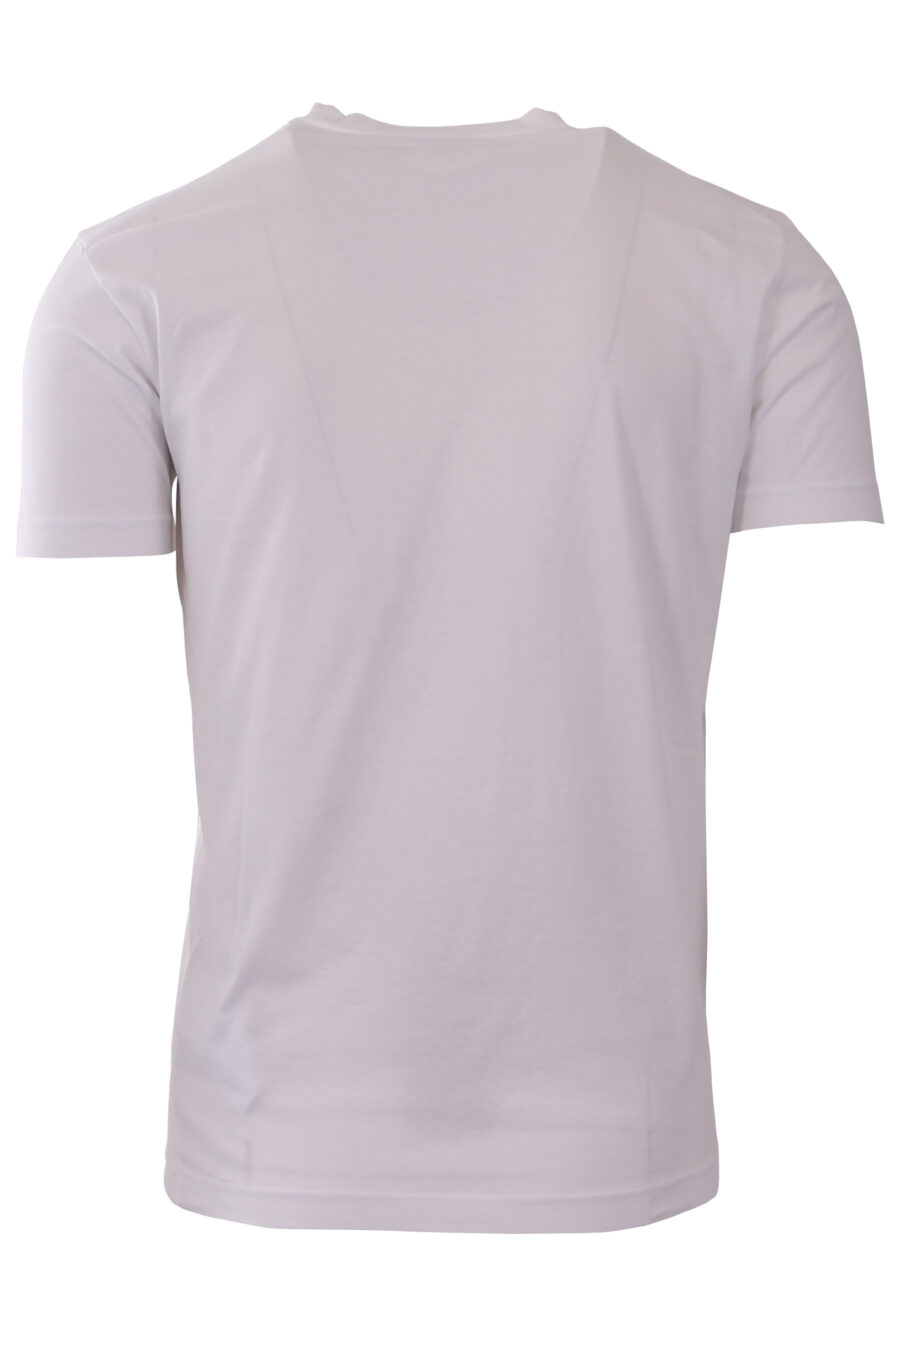 Camiseta blanca con maxilogo "milano italy" - IMG 1839